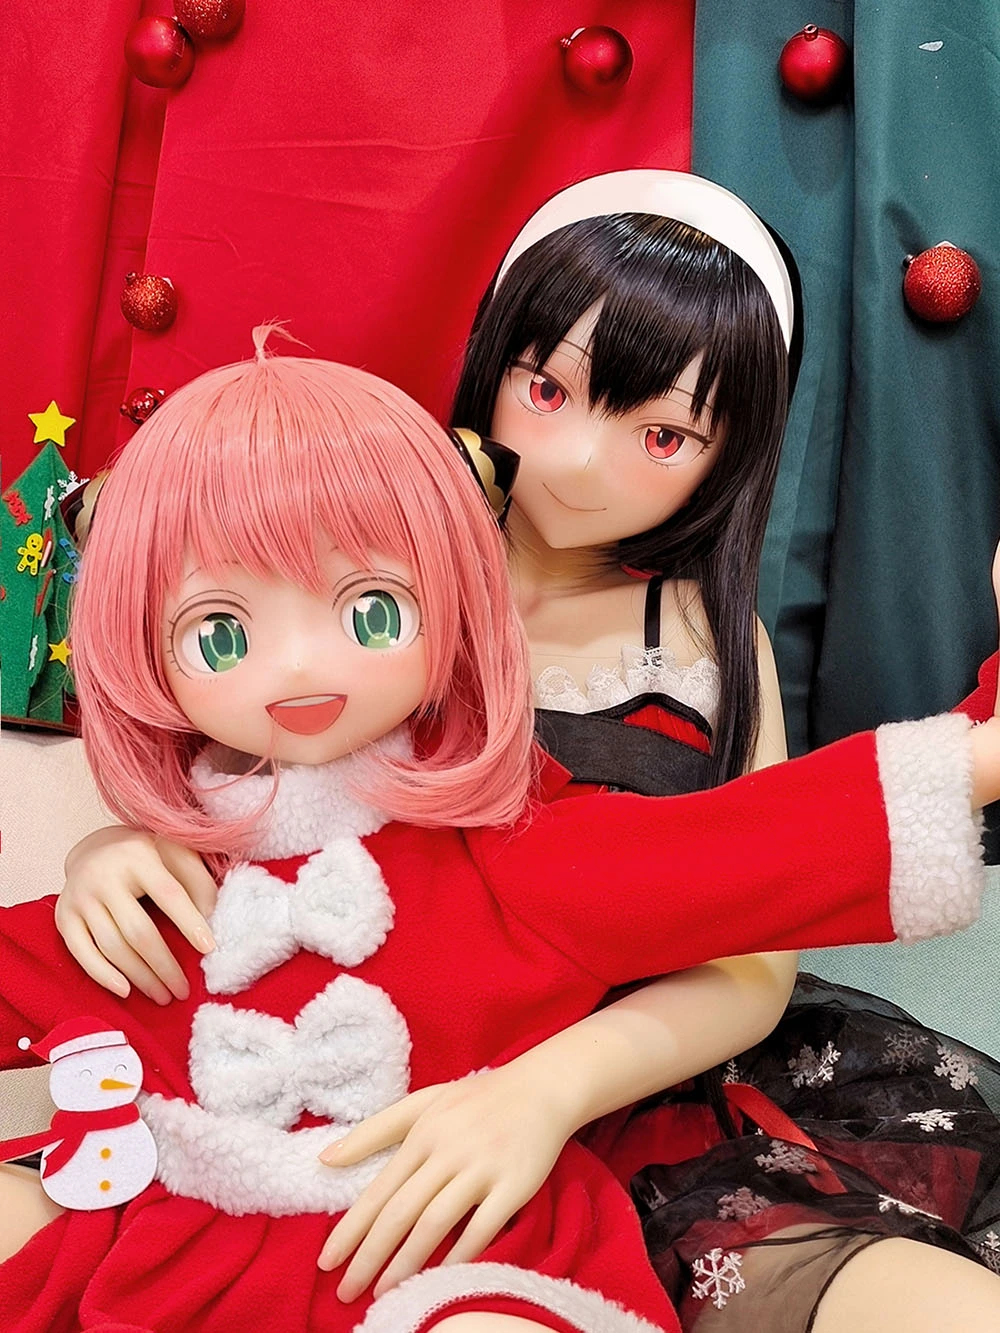 autome tpe big boobs anime love doll